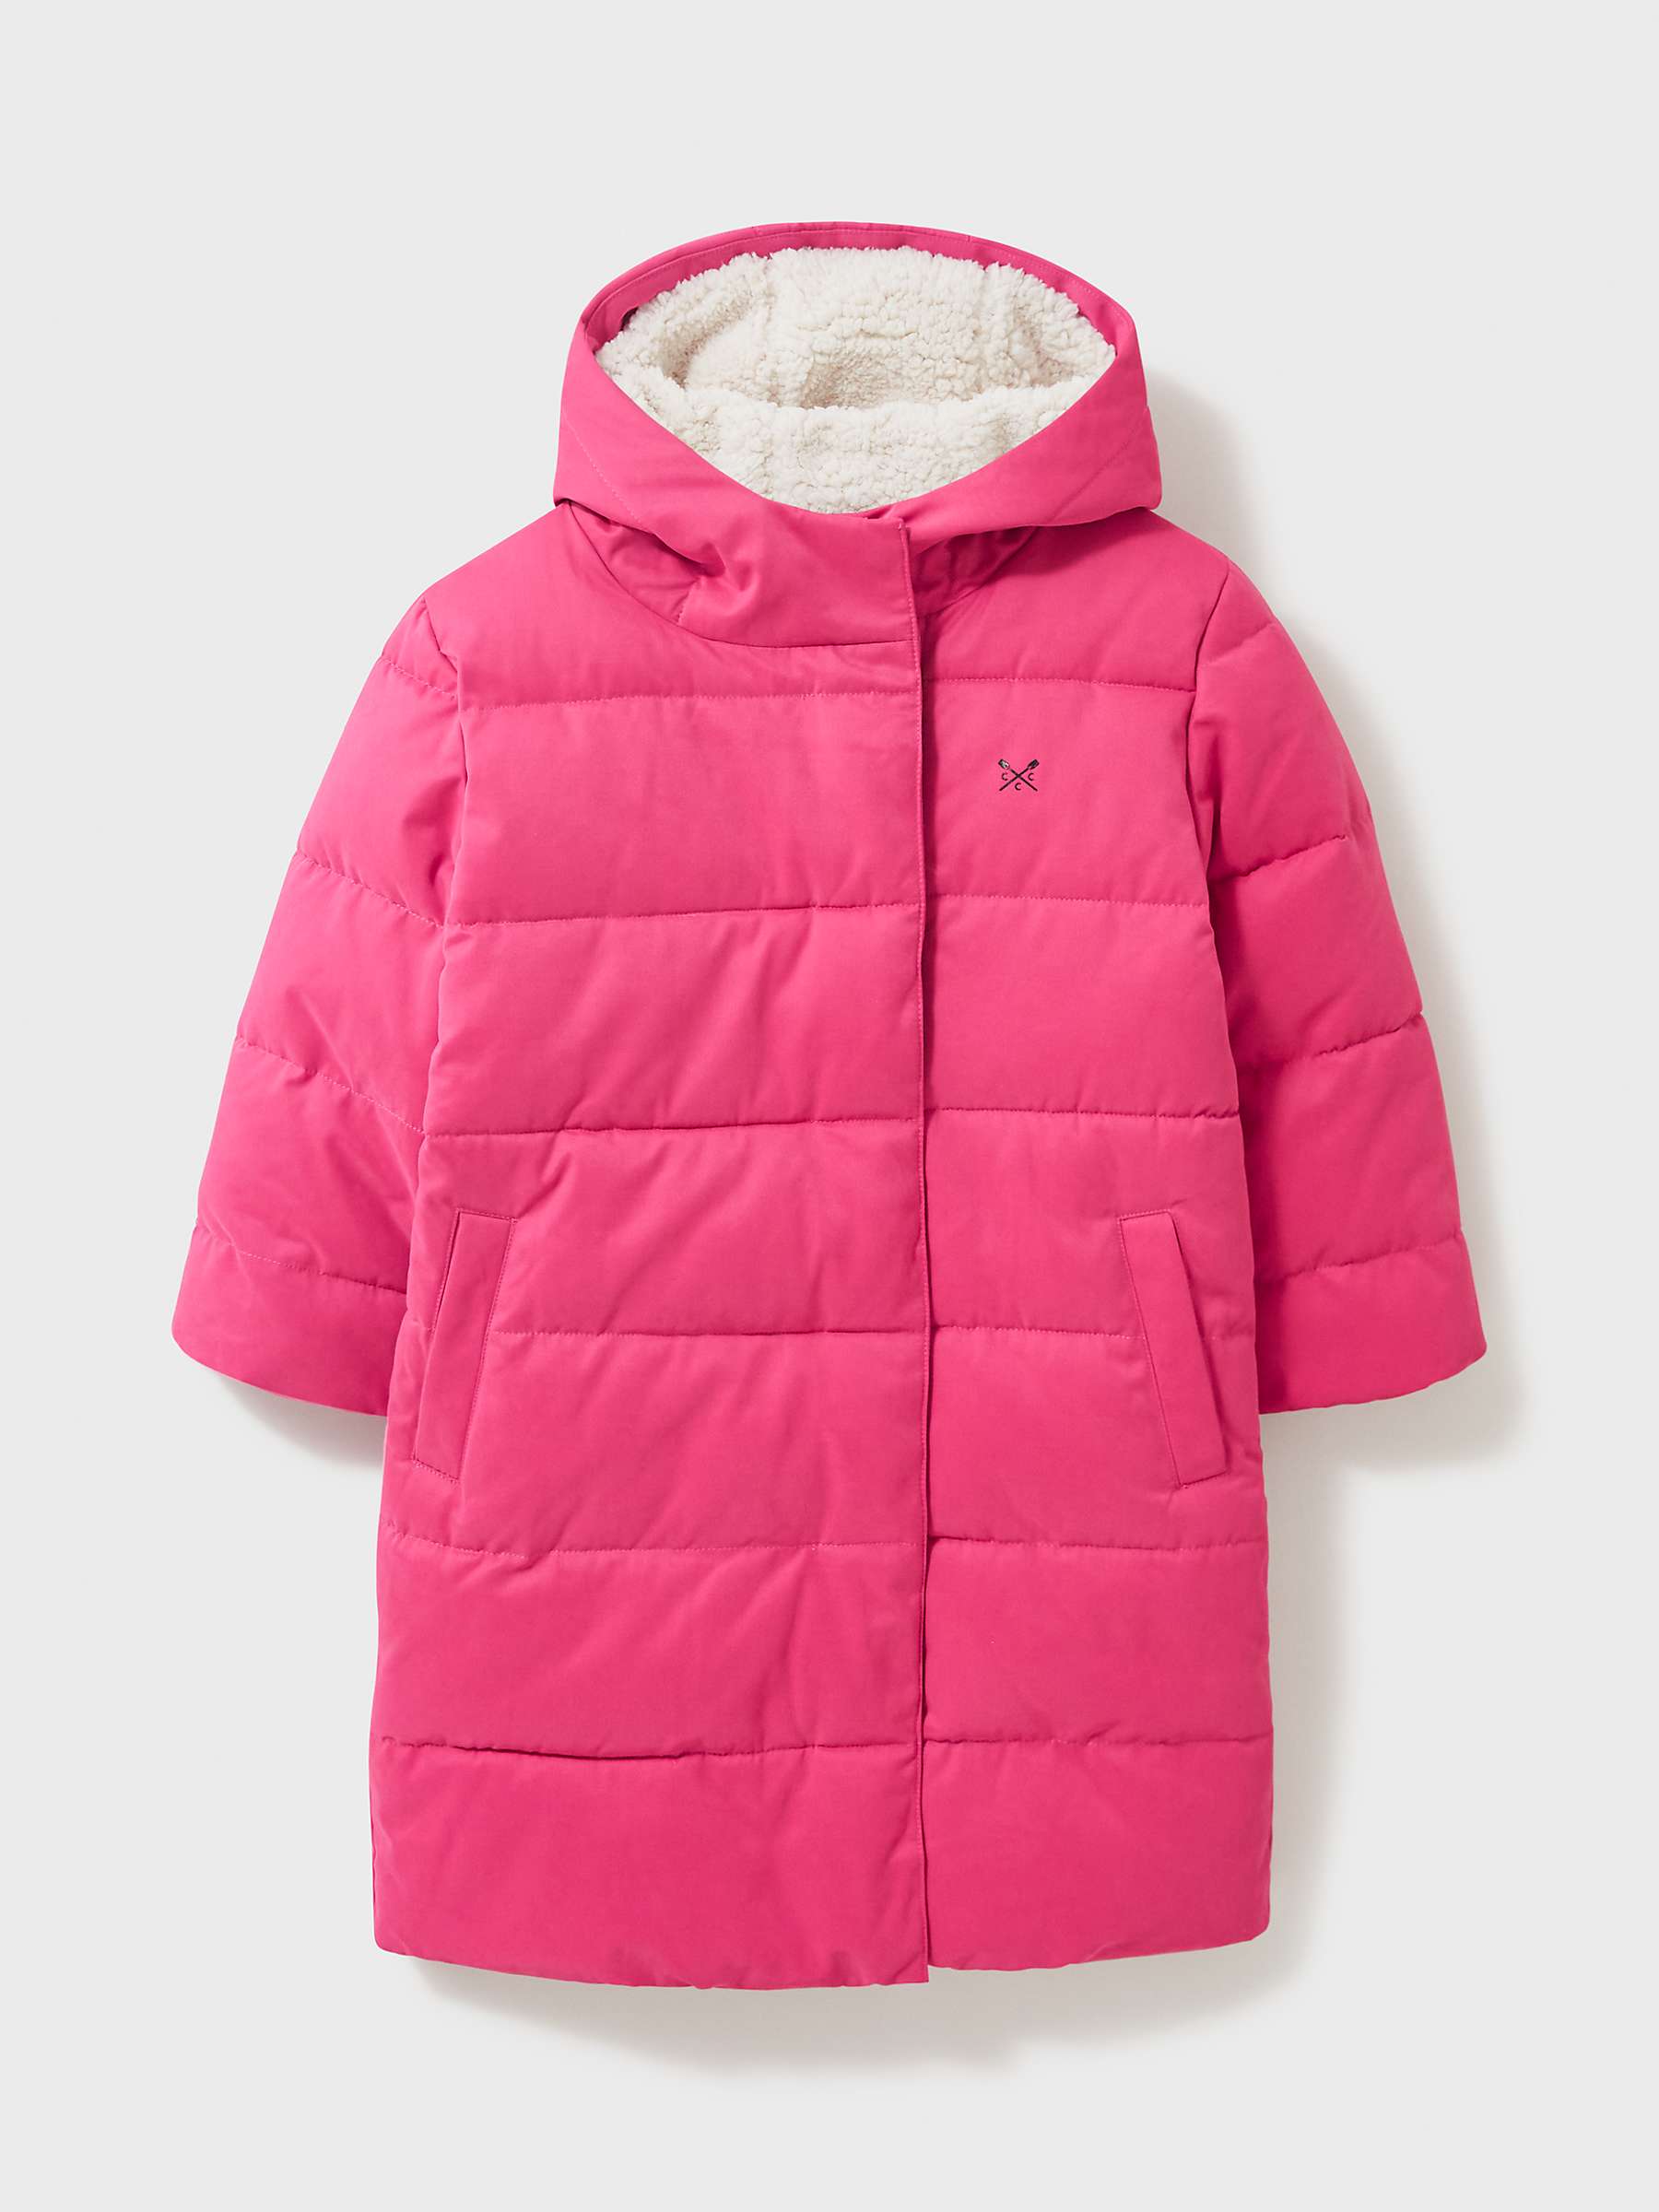 Crew Clothing Kids' Long Line Duvet Coat, Mid Pink at John Lewis & Partners